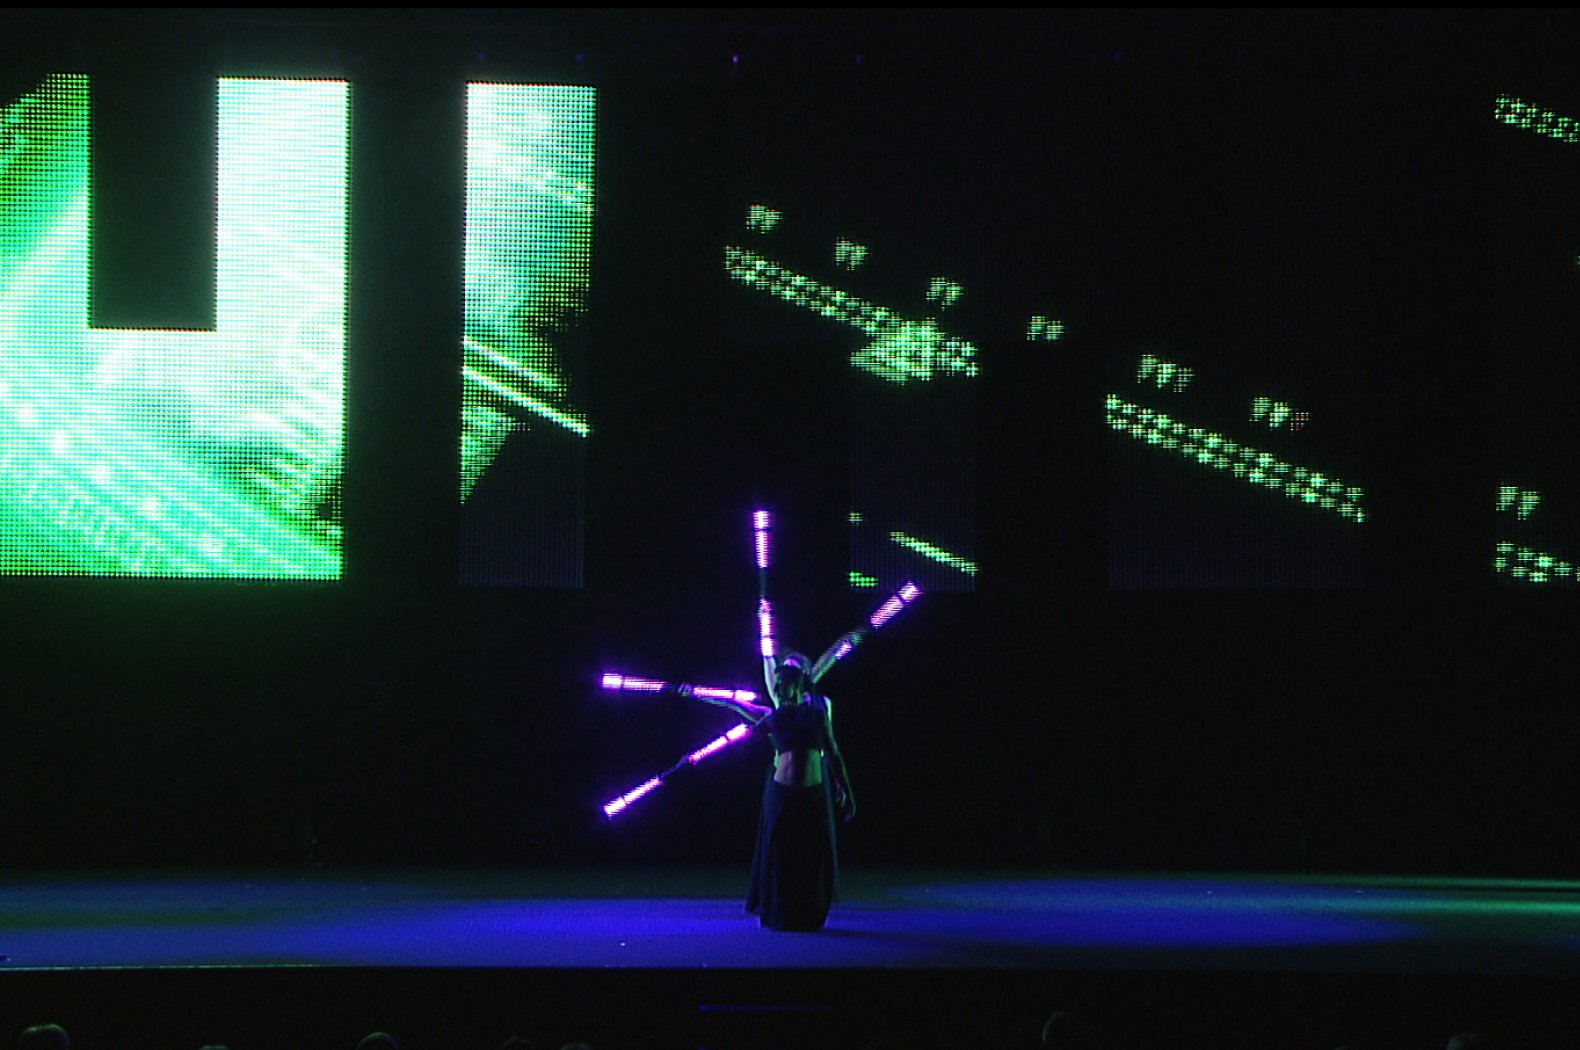 epfl-inauguration-performance-lumière-dance-projection-suisse-event